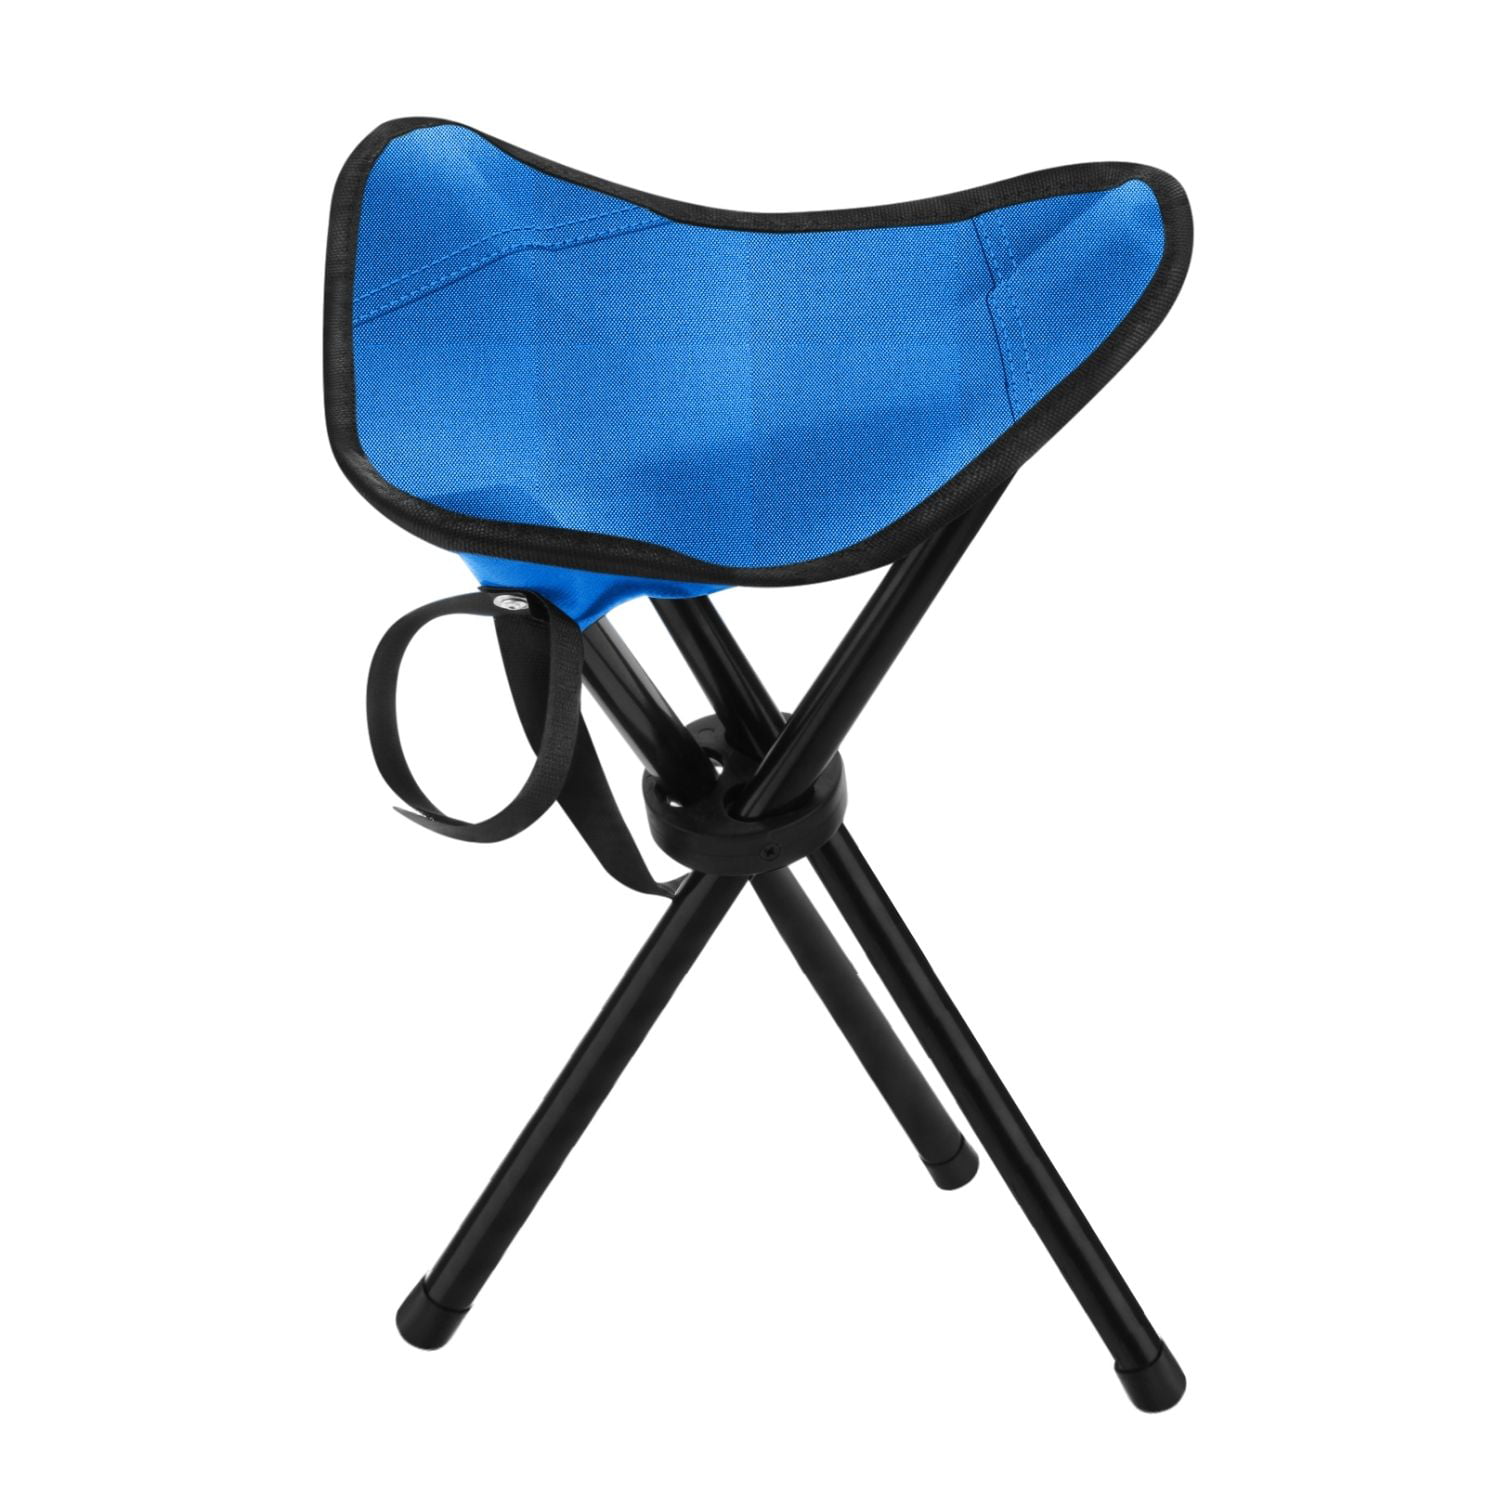 Folding Camping Stool Tripod Chair 3-Legged Blue Portable, 52% OFF